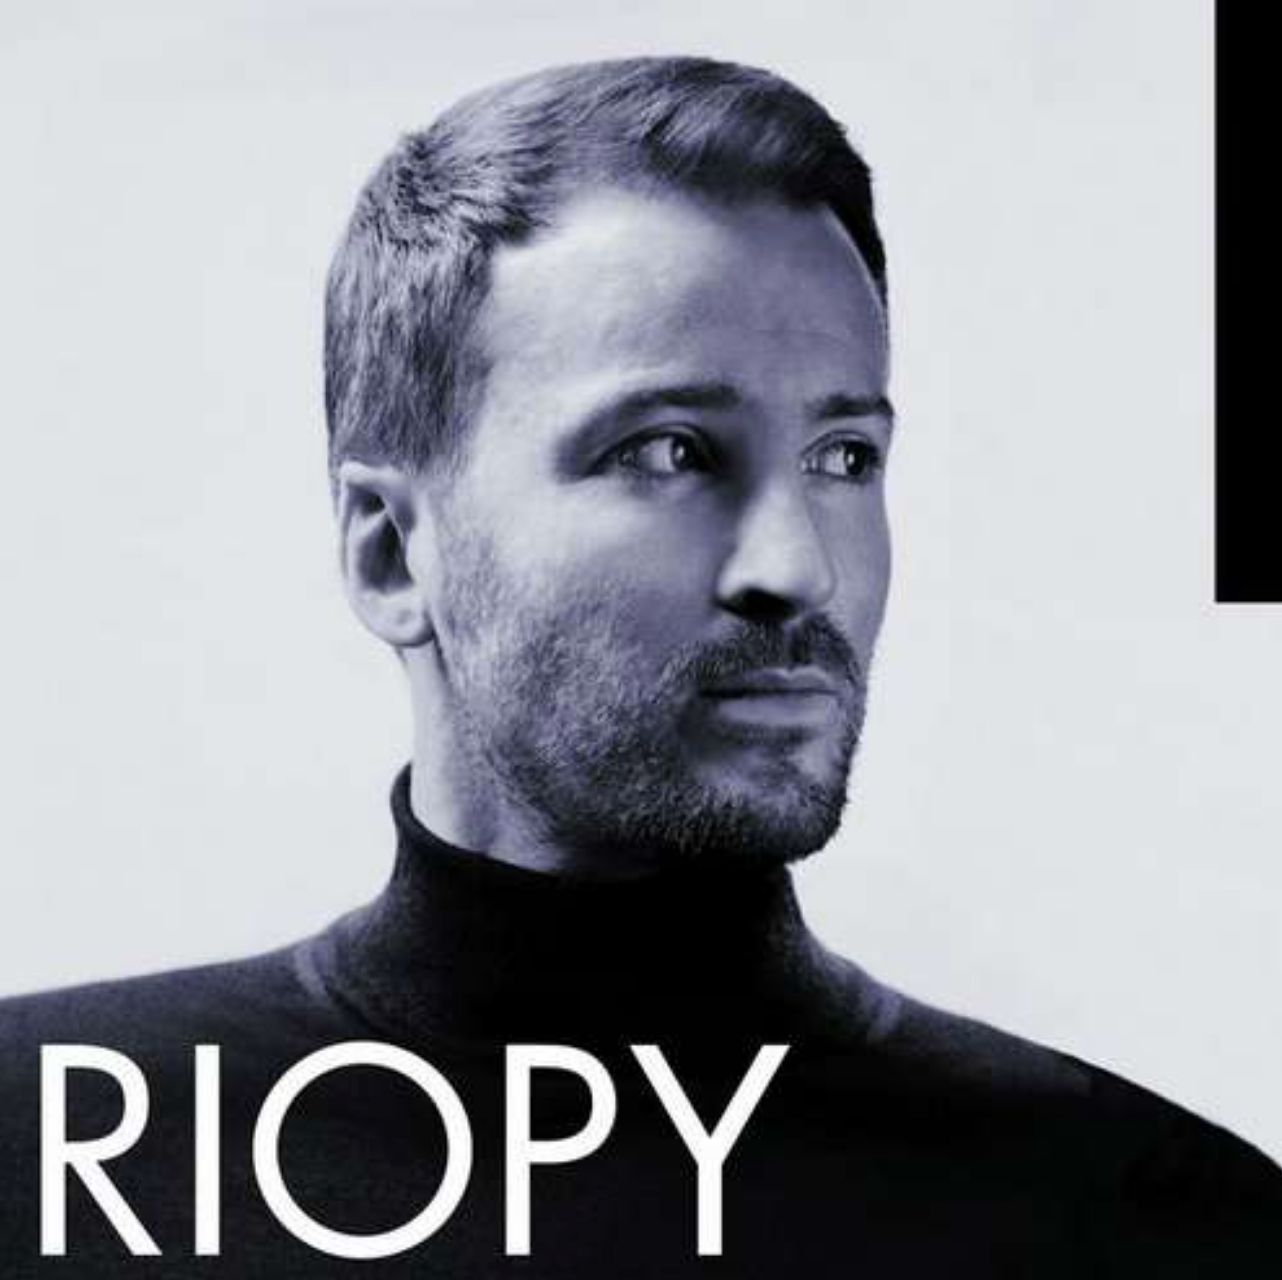 Drive music sheet from RIOPY album